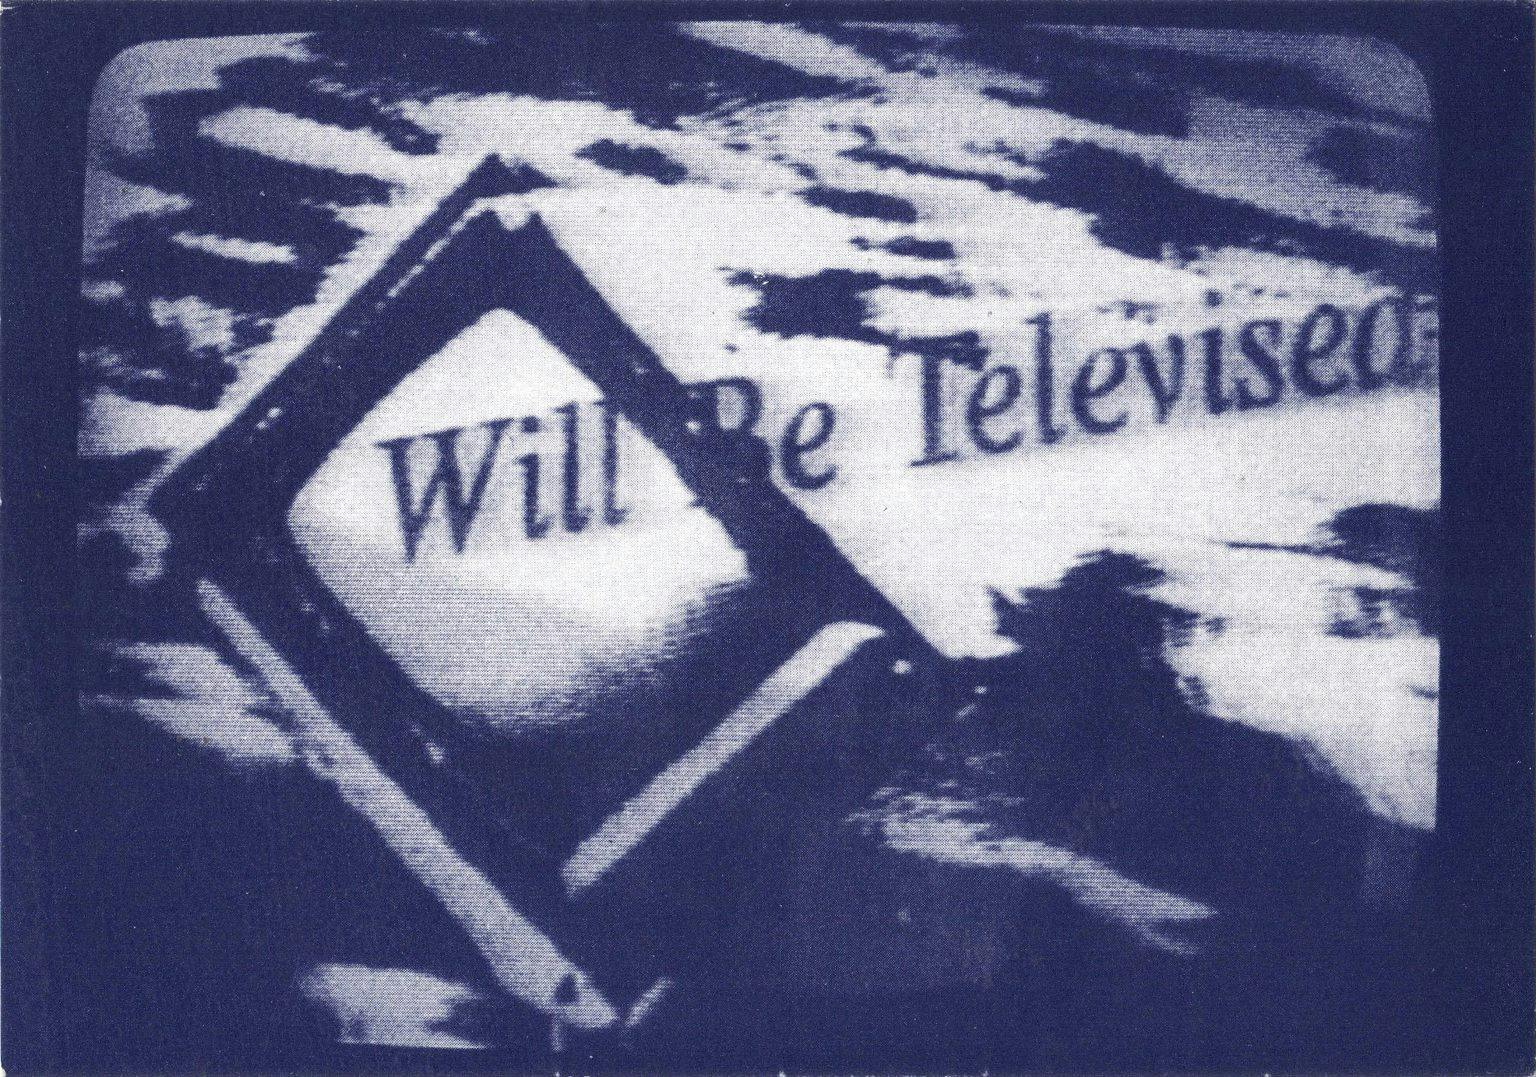 Fringe’91 – Videotage – 1990/91 Deep Dish and the Others – Postcard 藝穗會91- 錄映太奇- 深碟及其他 – 明信片